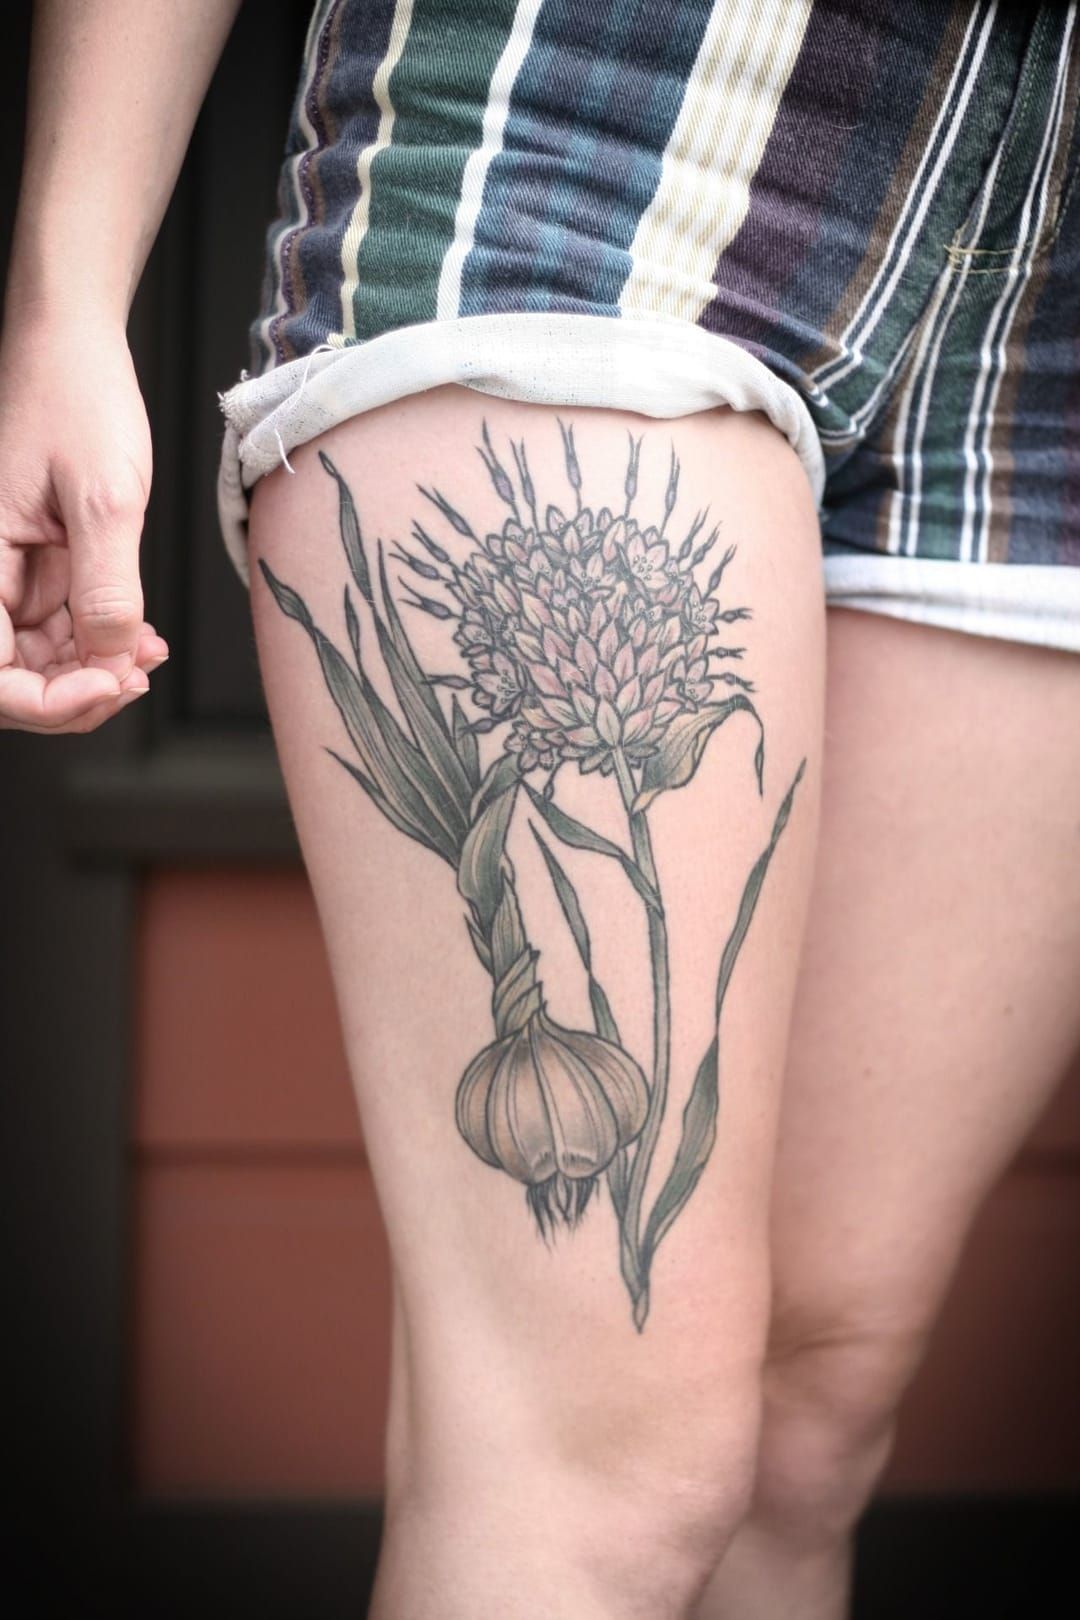 Shallot tattoo by Kirsten Holliday from Wonderland Tattoo, Portland, Oregon.